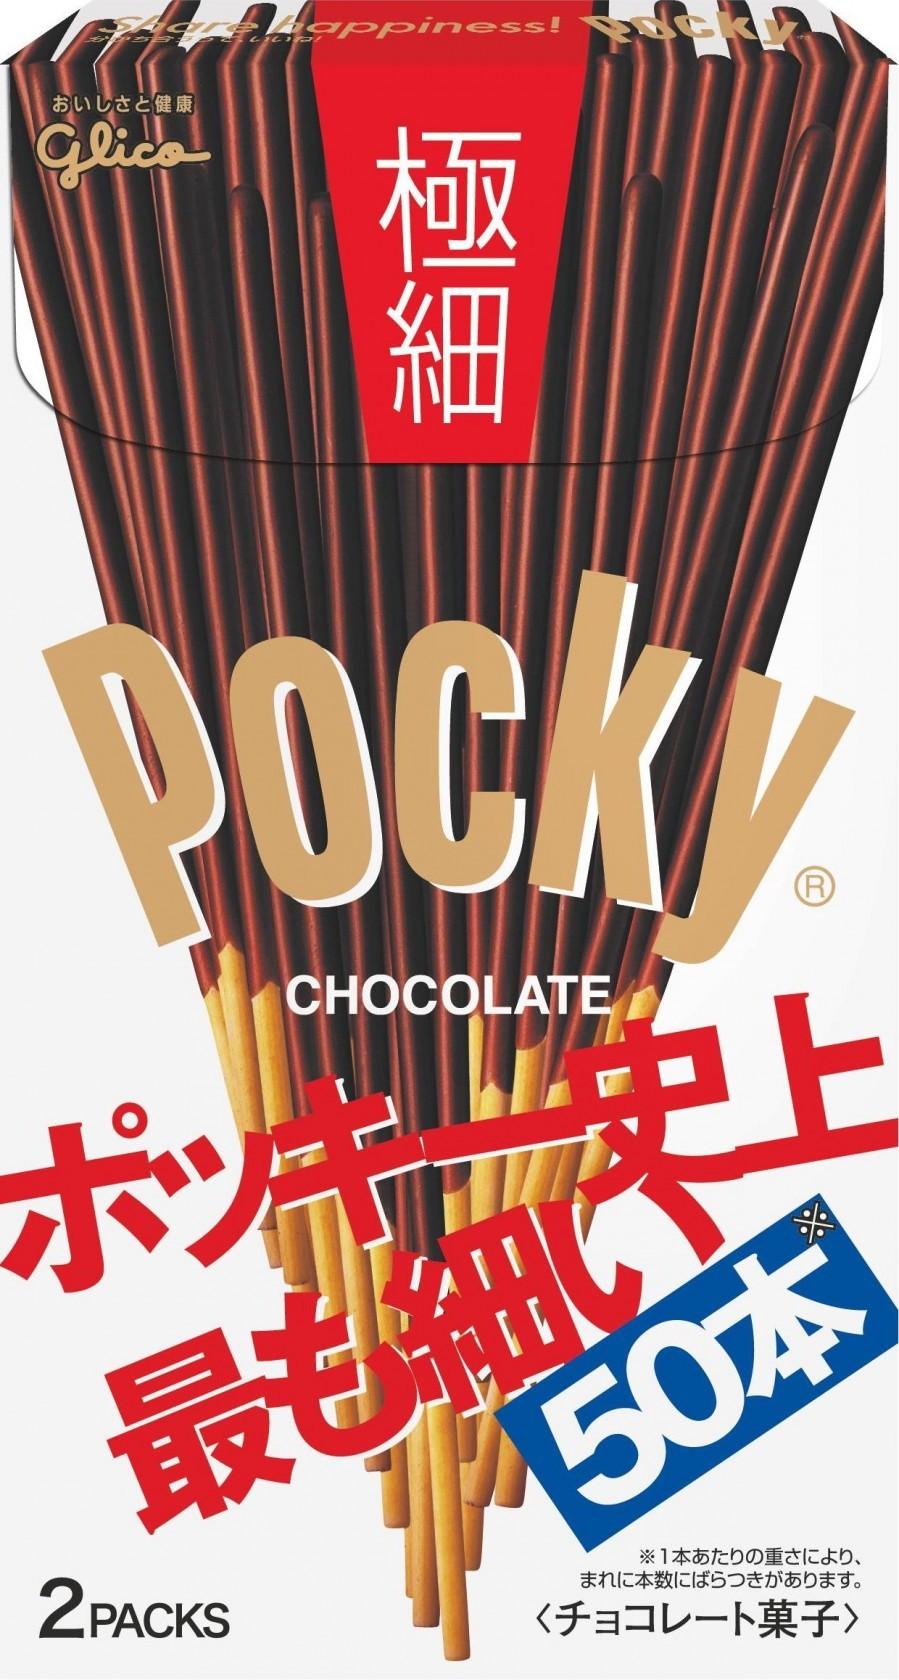 glico-pocky-ultra-slim-chocolate-cream-covered-biscuit-sticks